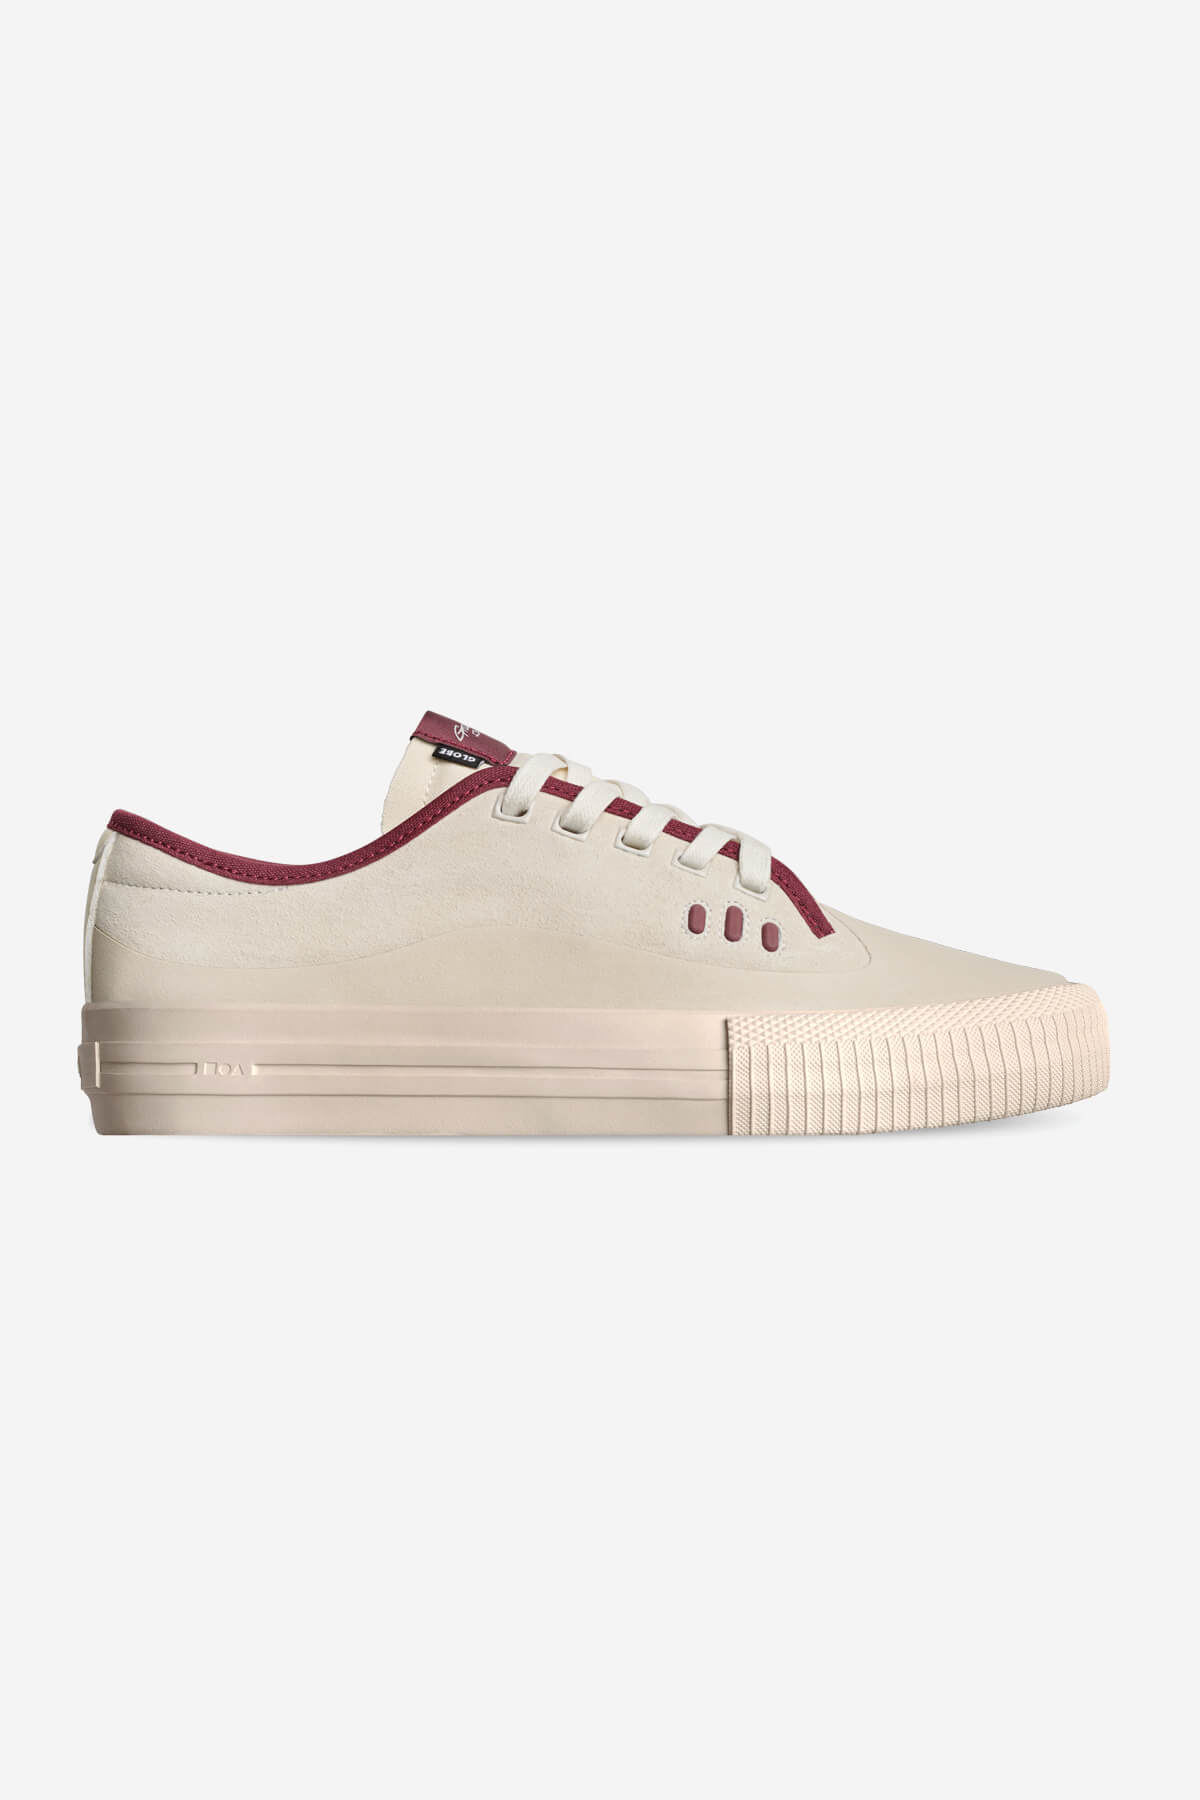 Globe - Gillette - Cream/Pomegranate - skateboard Sapatos